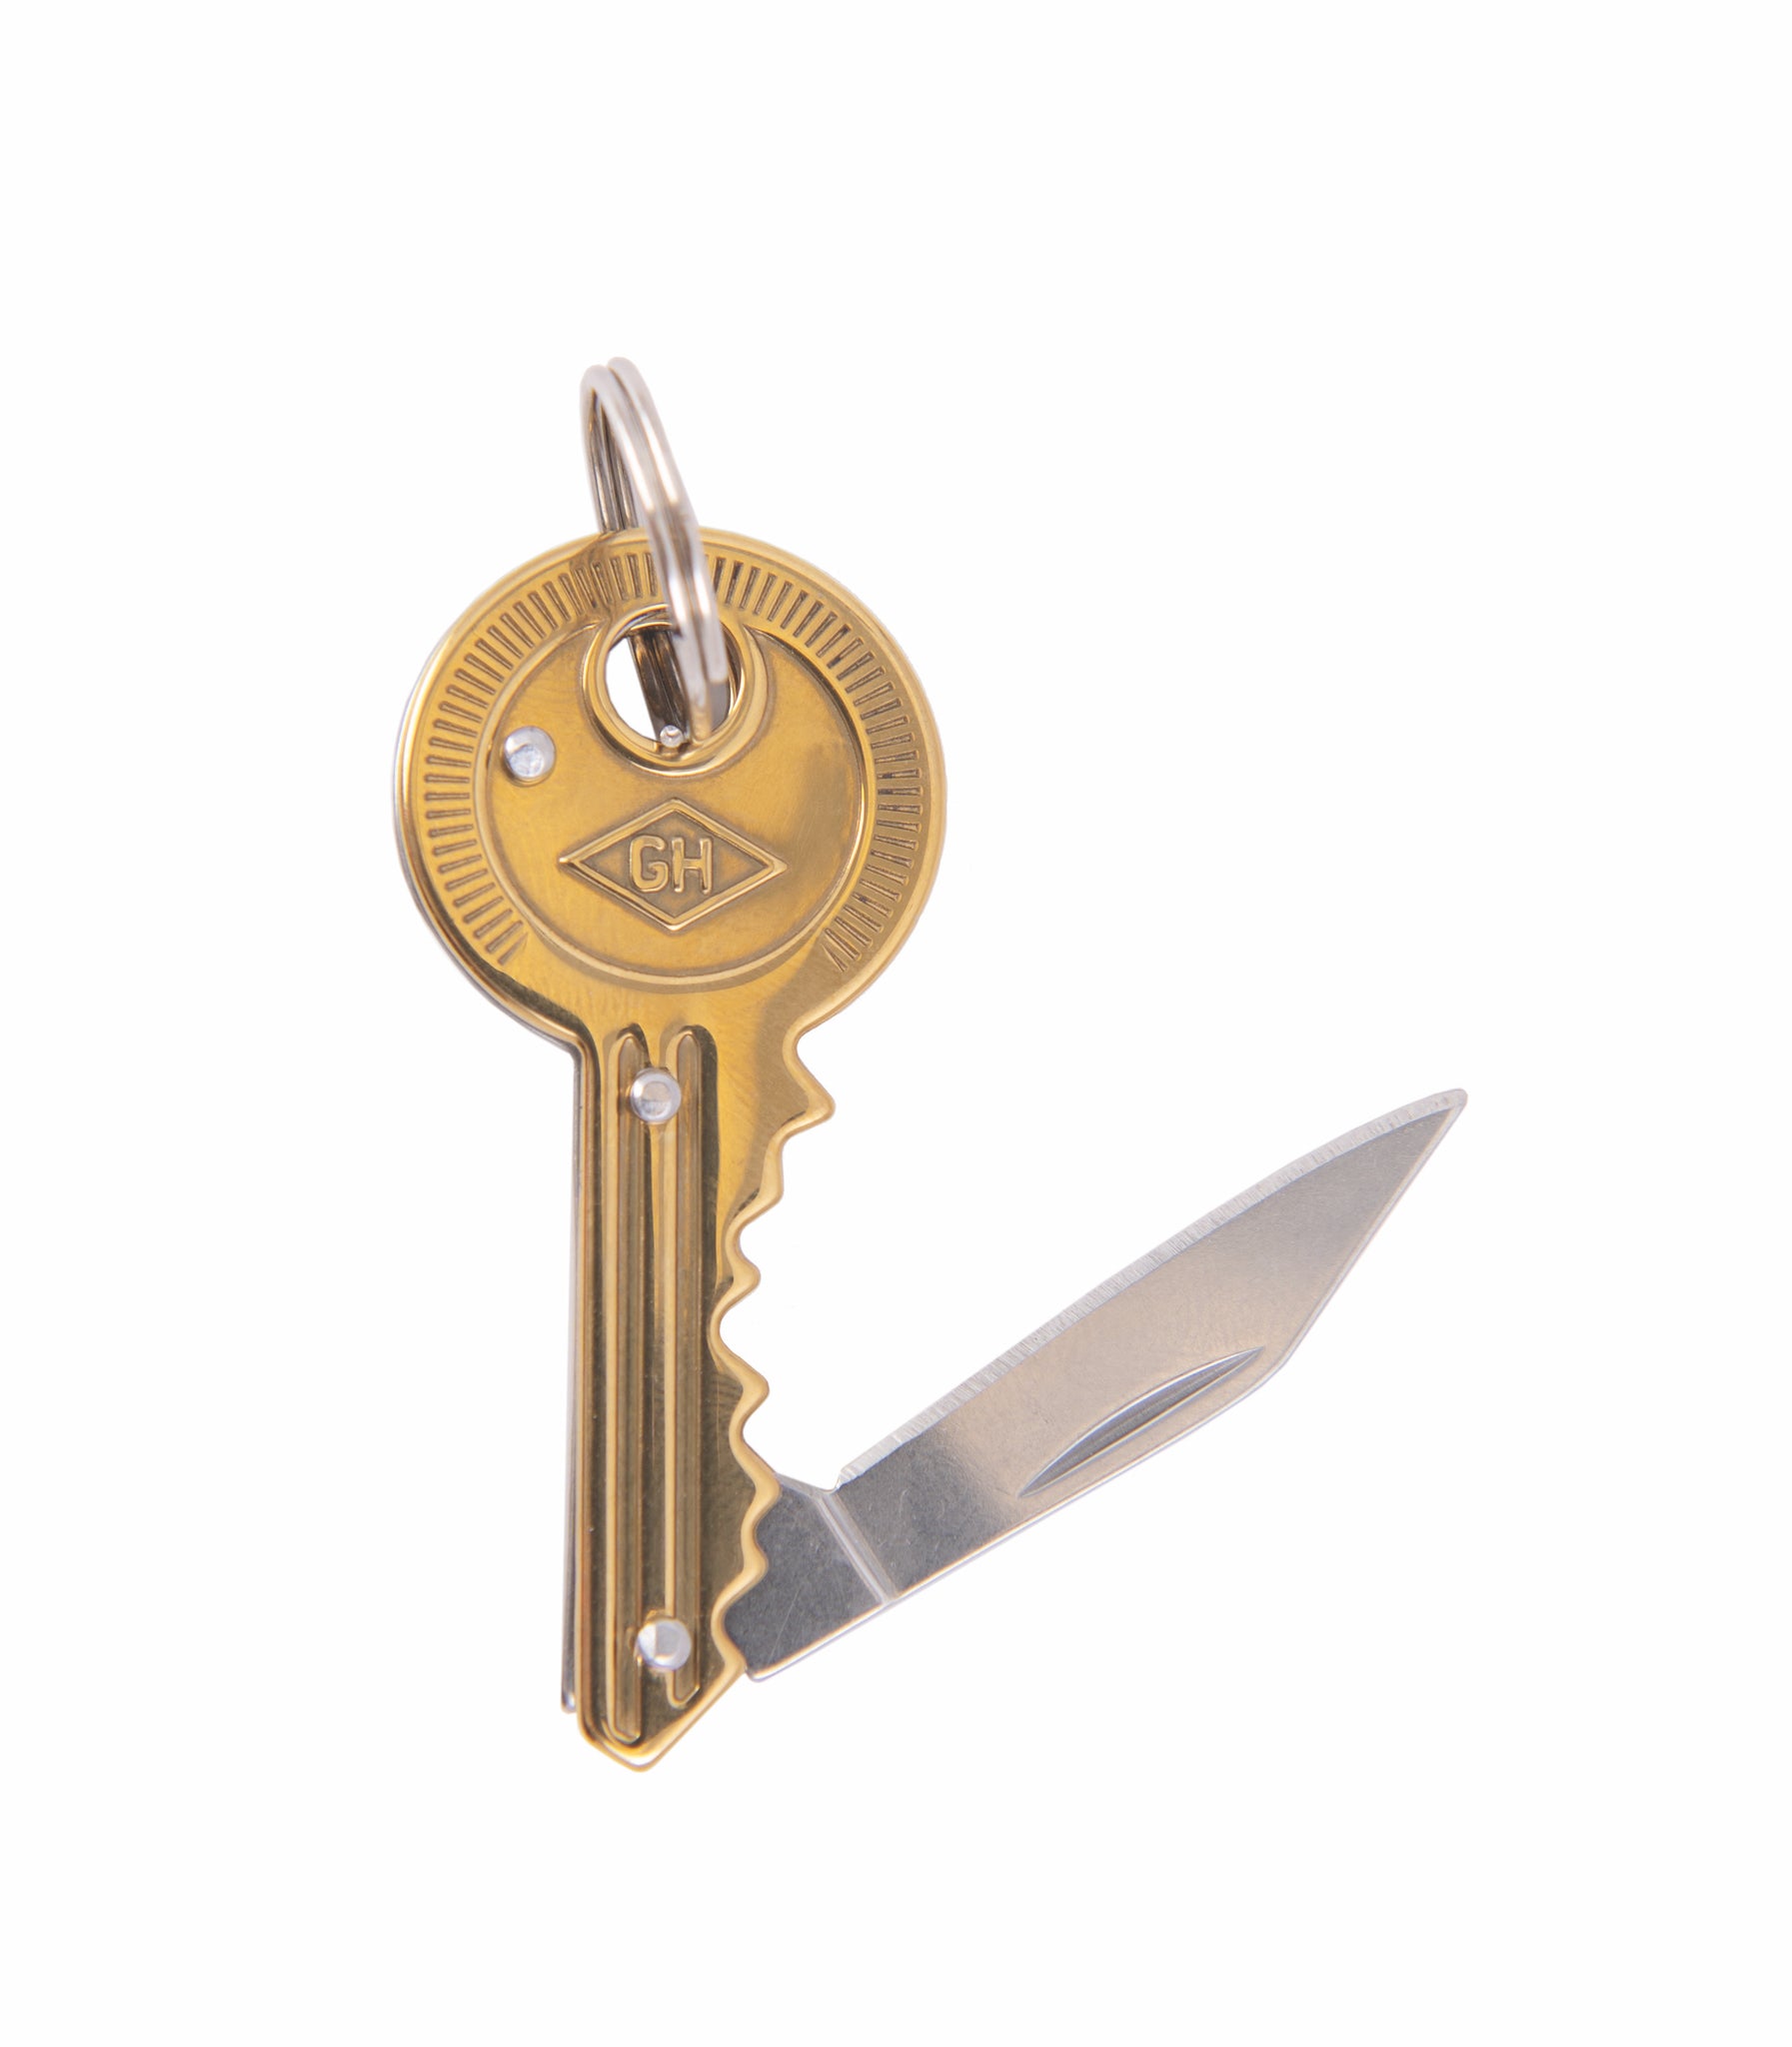 Heart Key Knife Keychain